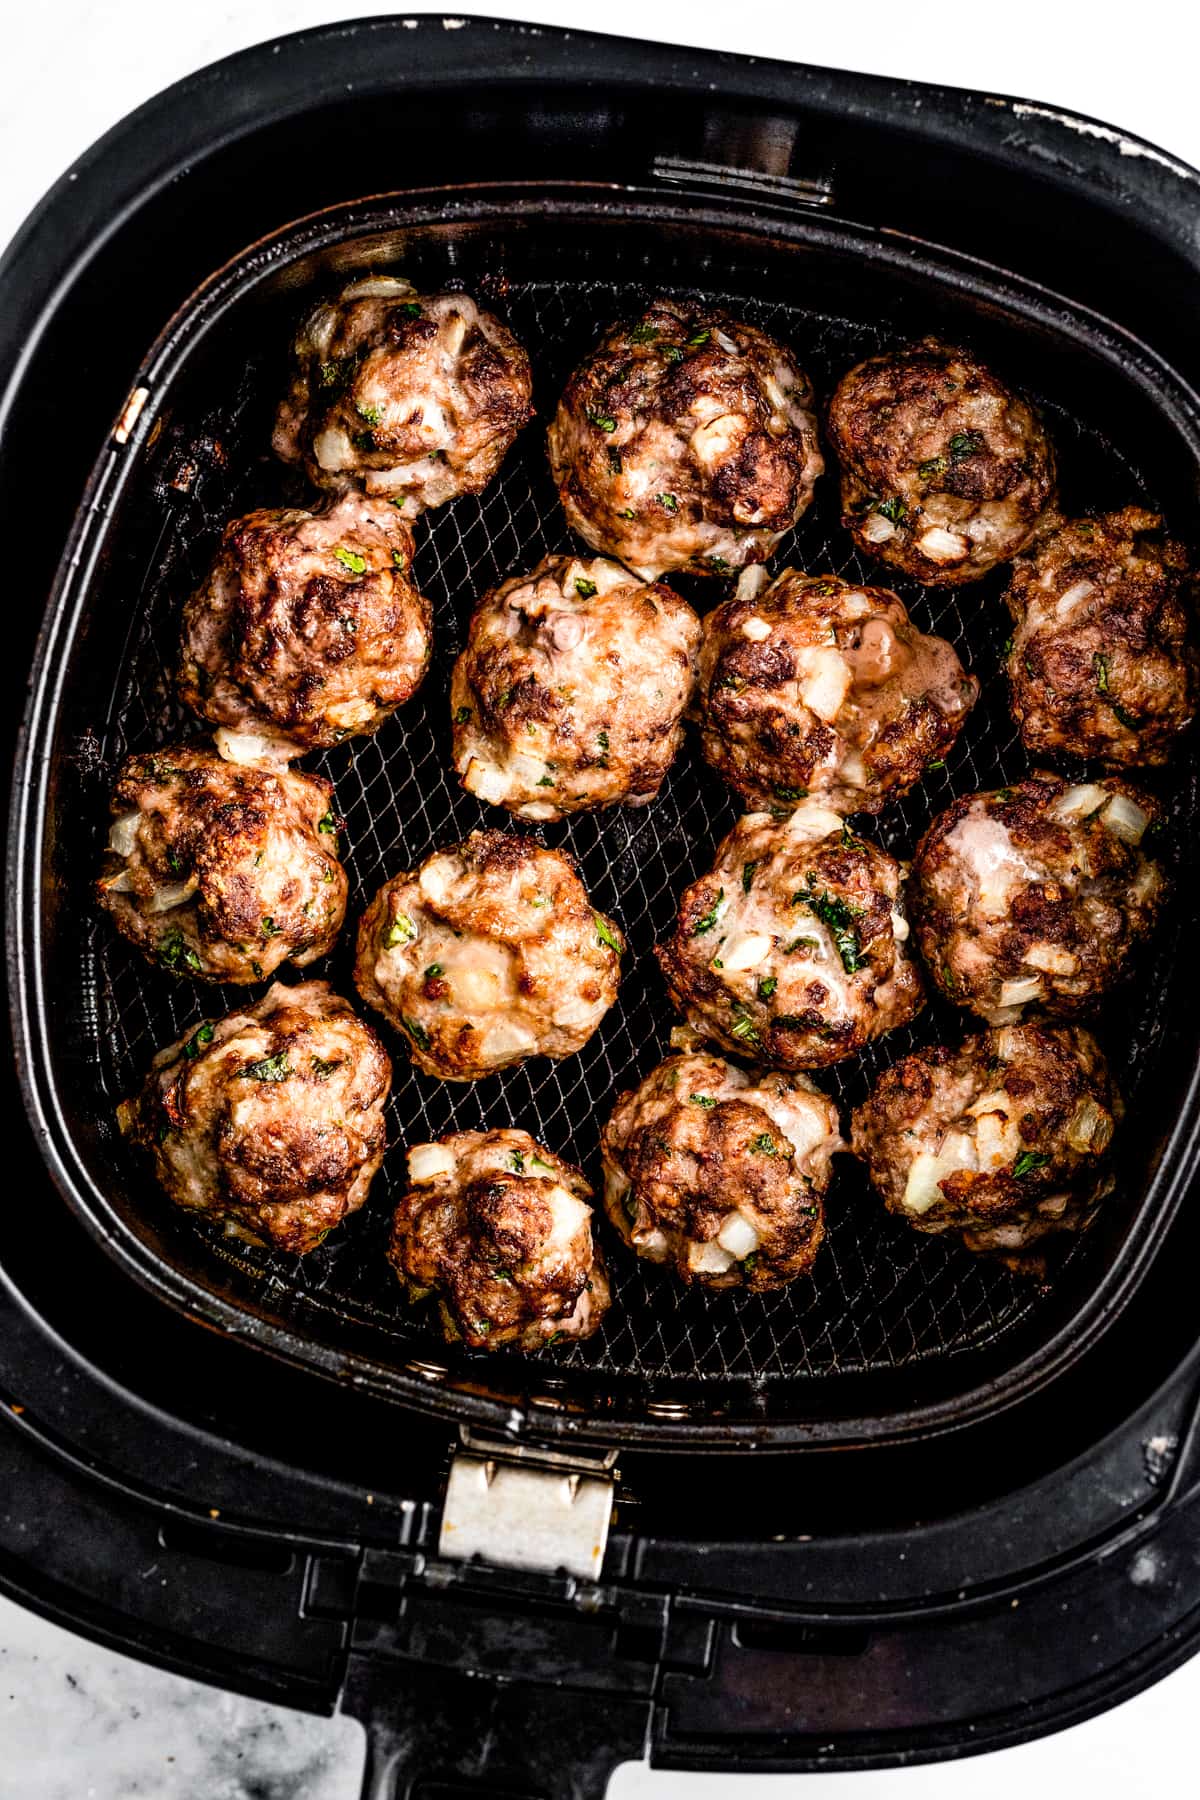 Overhead shot of meatballs cooking in an air fryer basket.